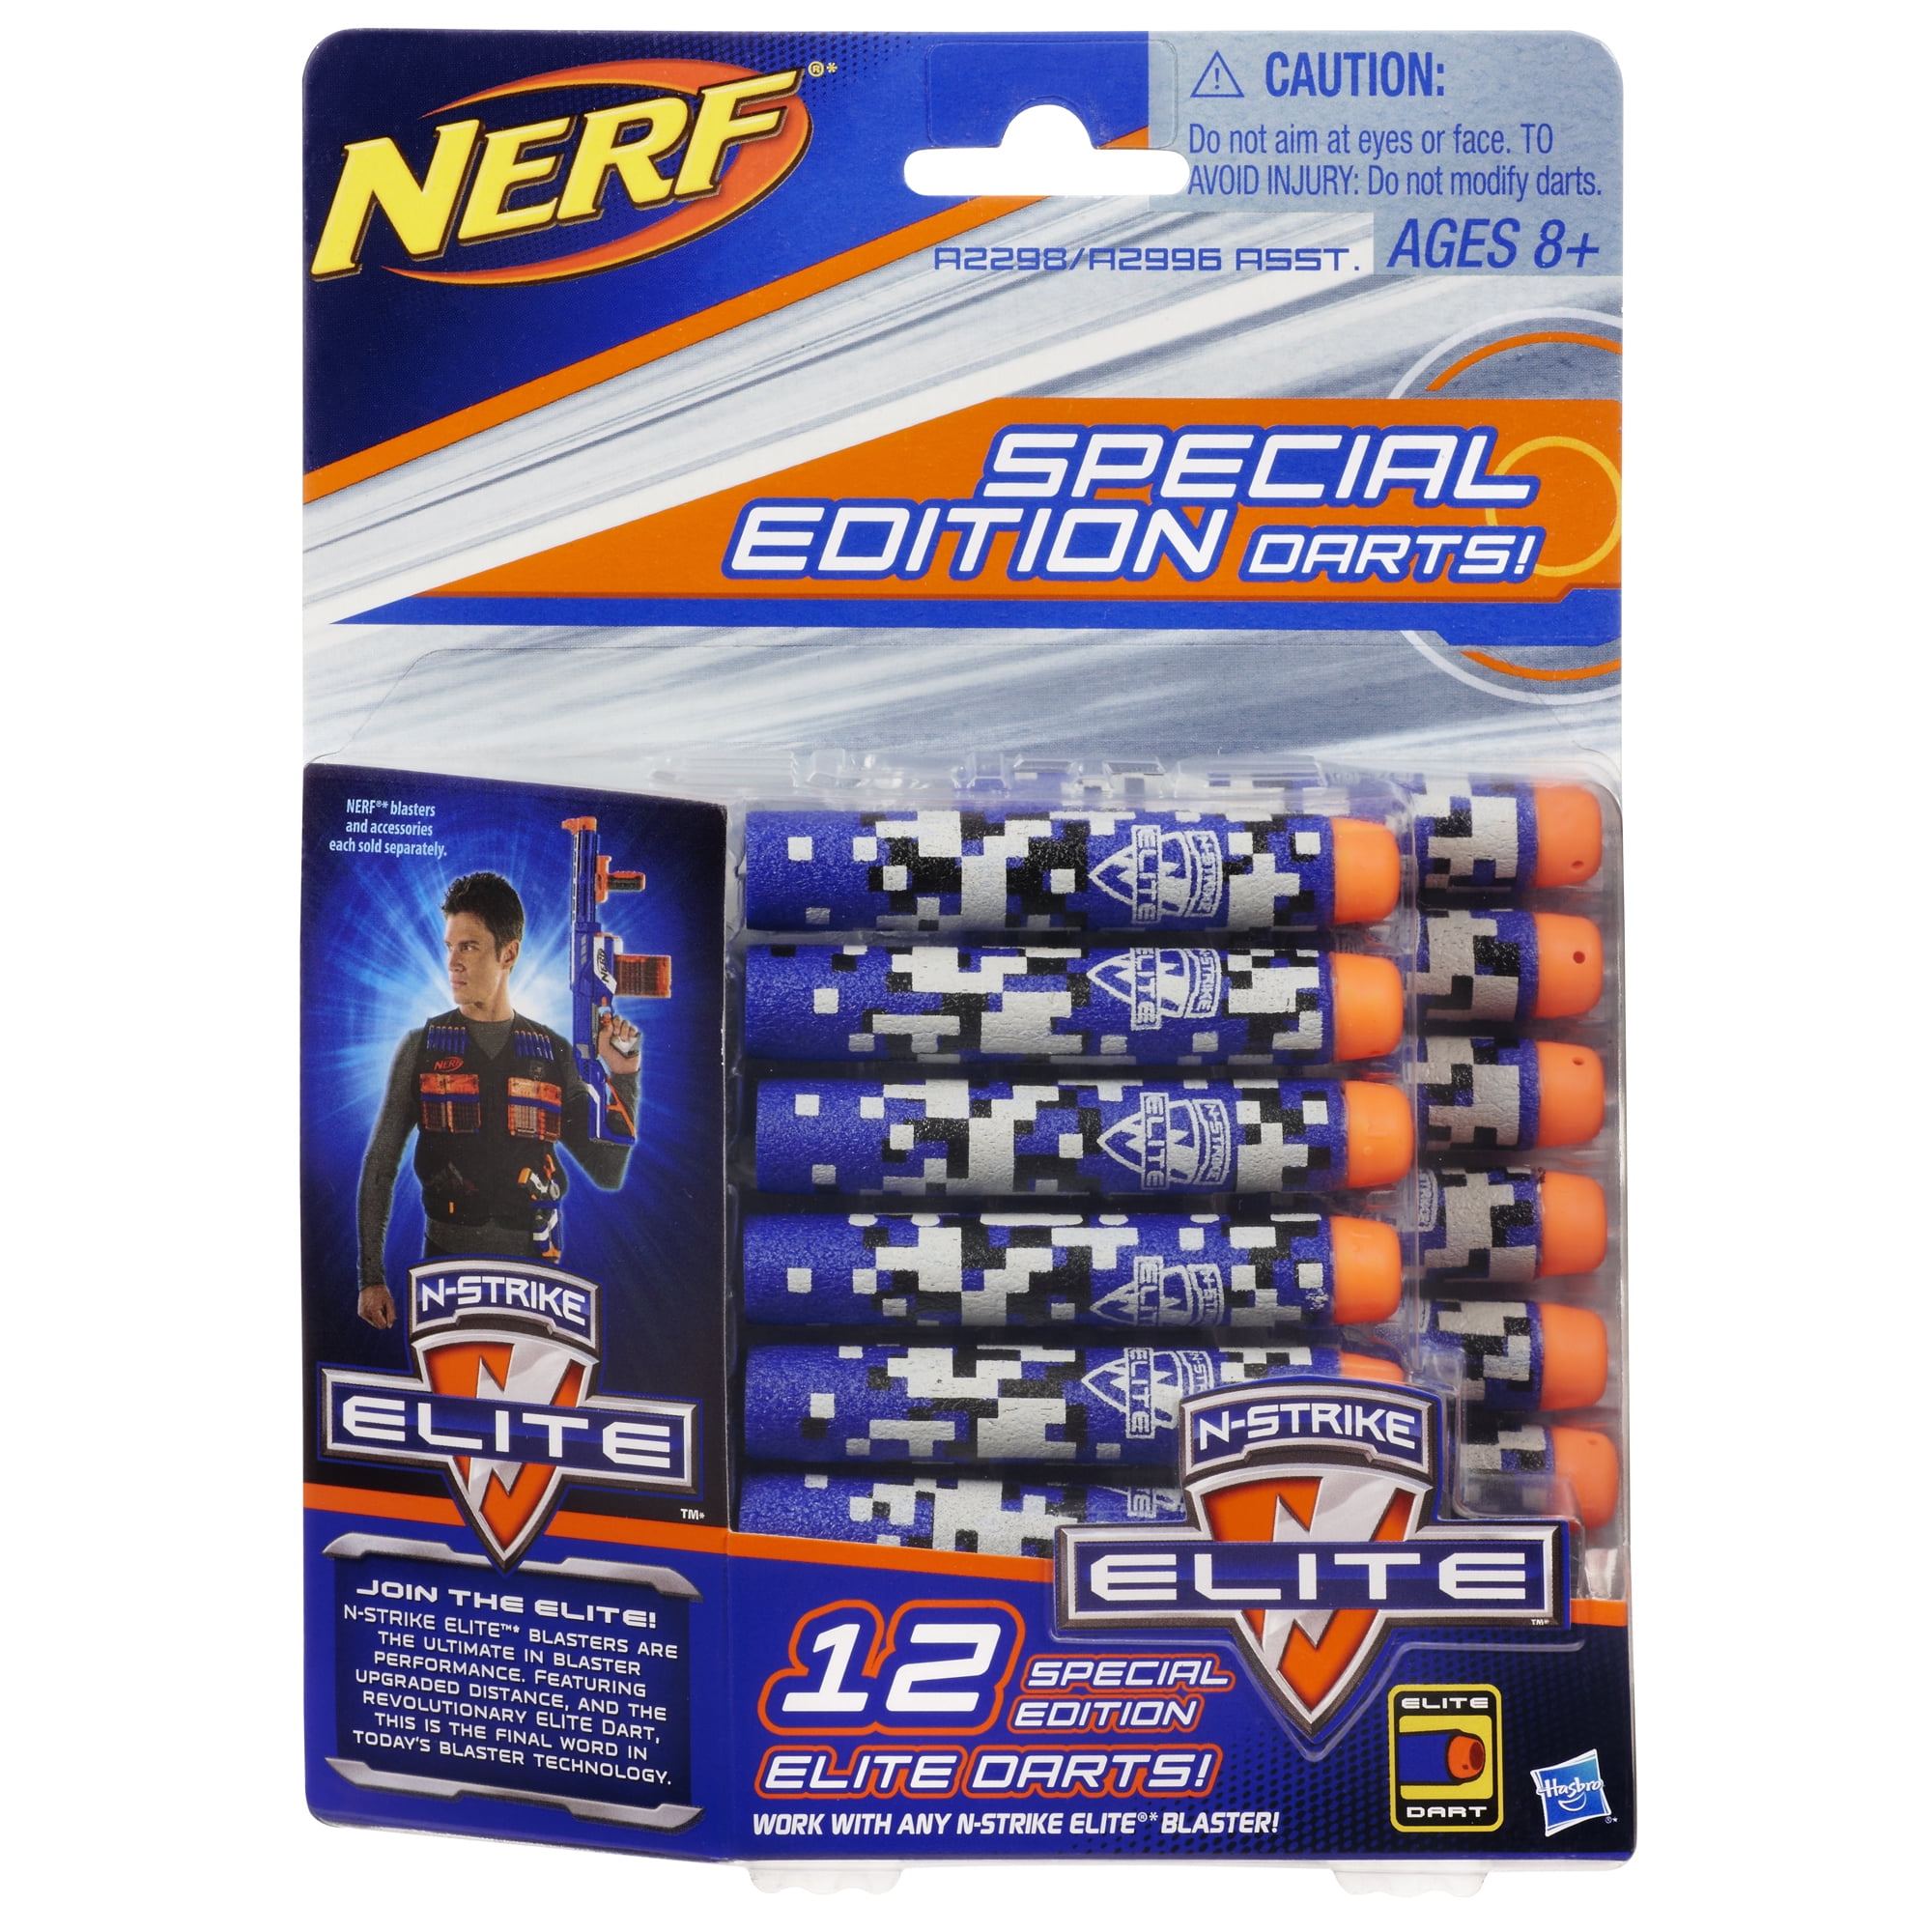 120 Hasbro Nerf N-Strike Elite Distance Darts Shoot 85ft 4 Packs 30x4 Genuine 